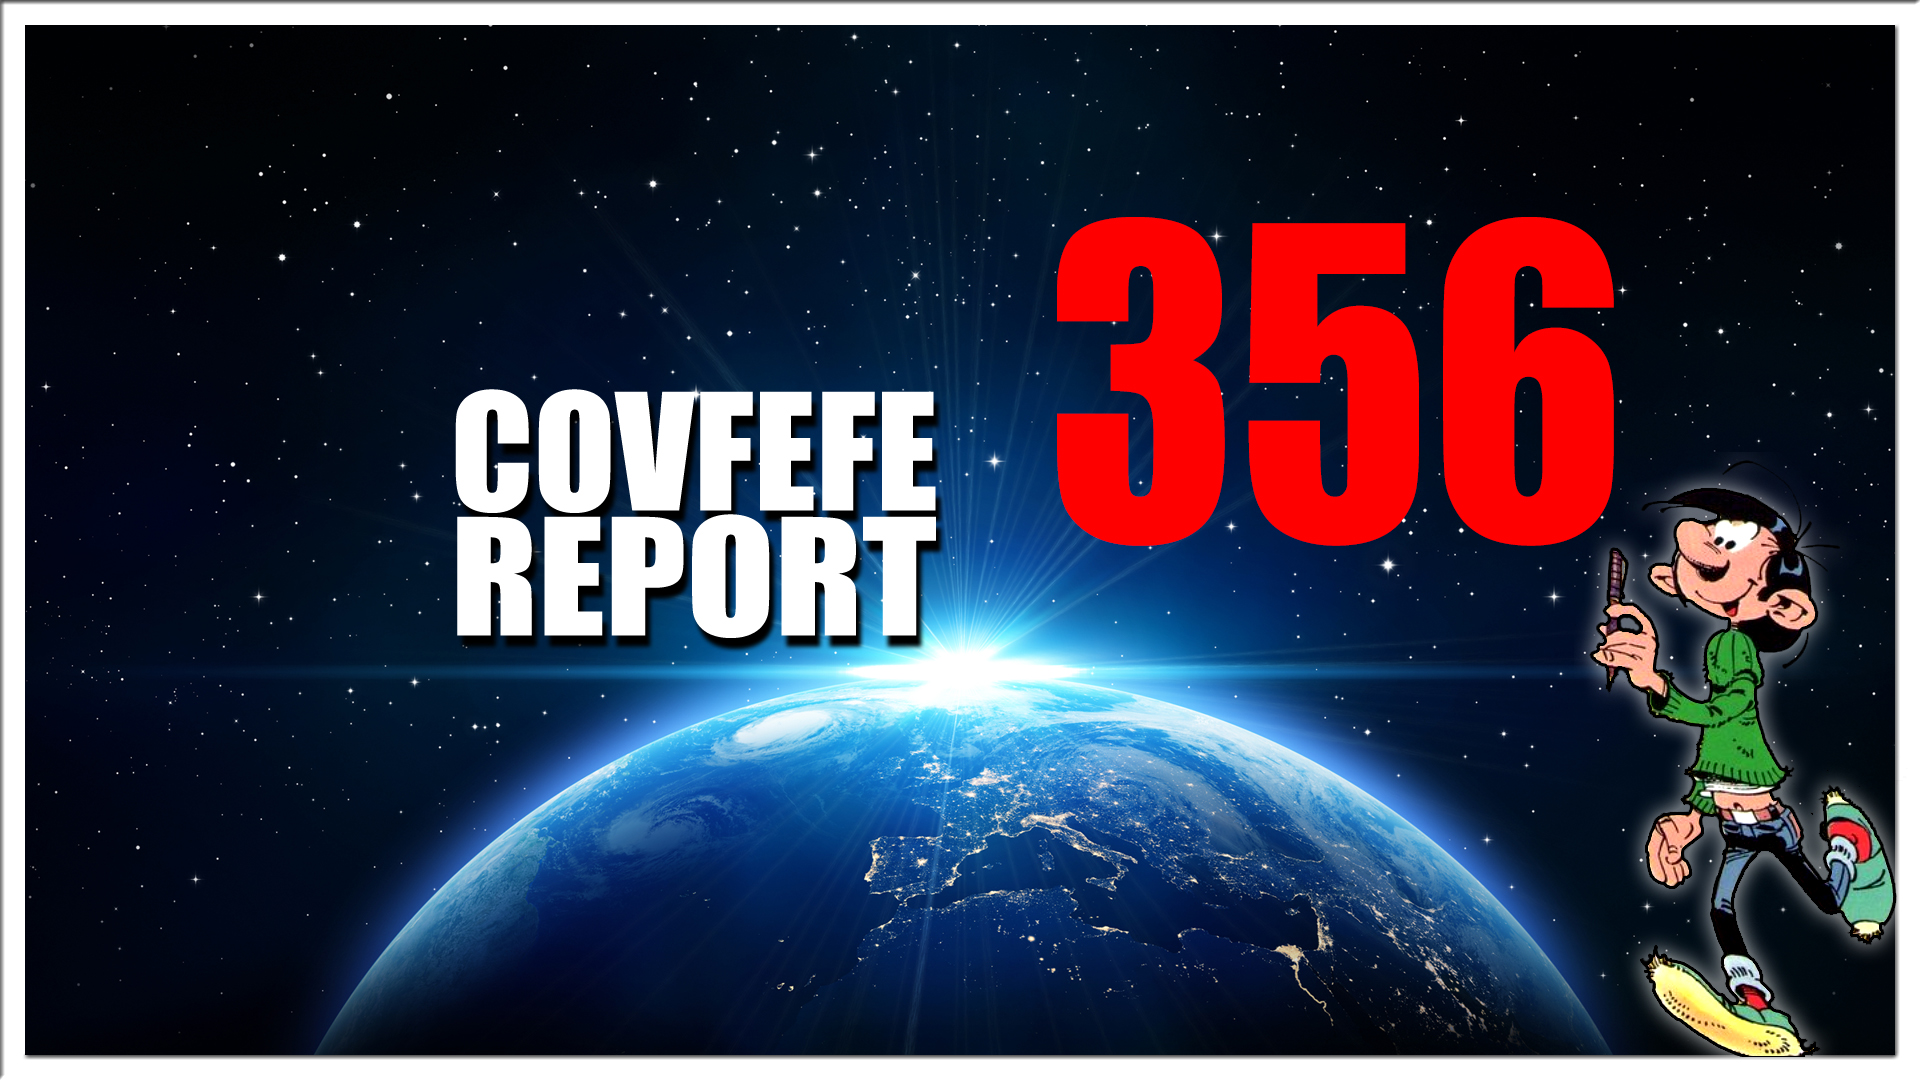 Covfefe Report 356. Zero delta, 23, Poep, Gele ster, Gommers, H & B Clinton, Dan Scavino